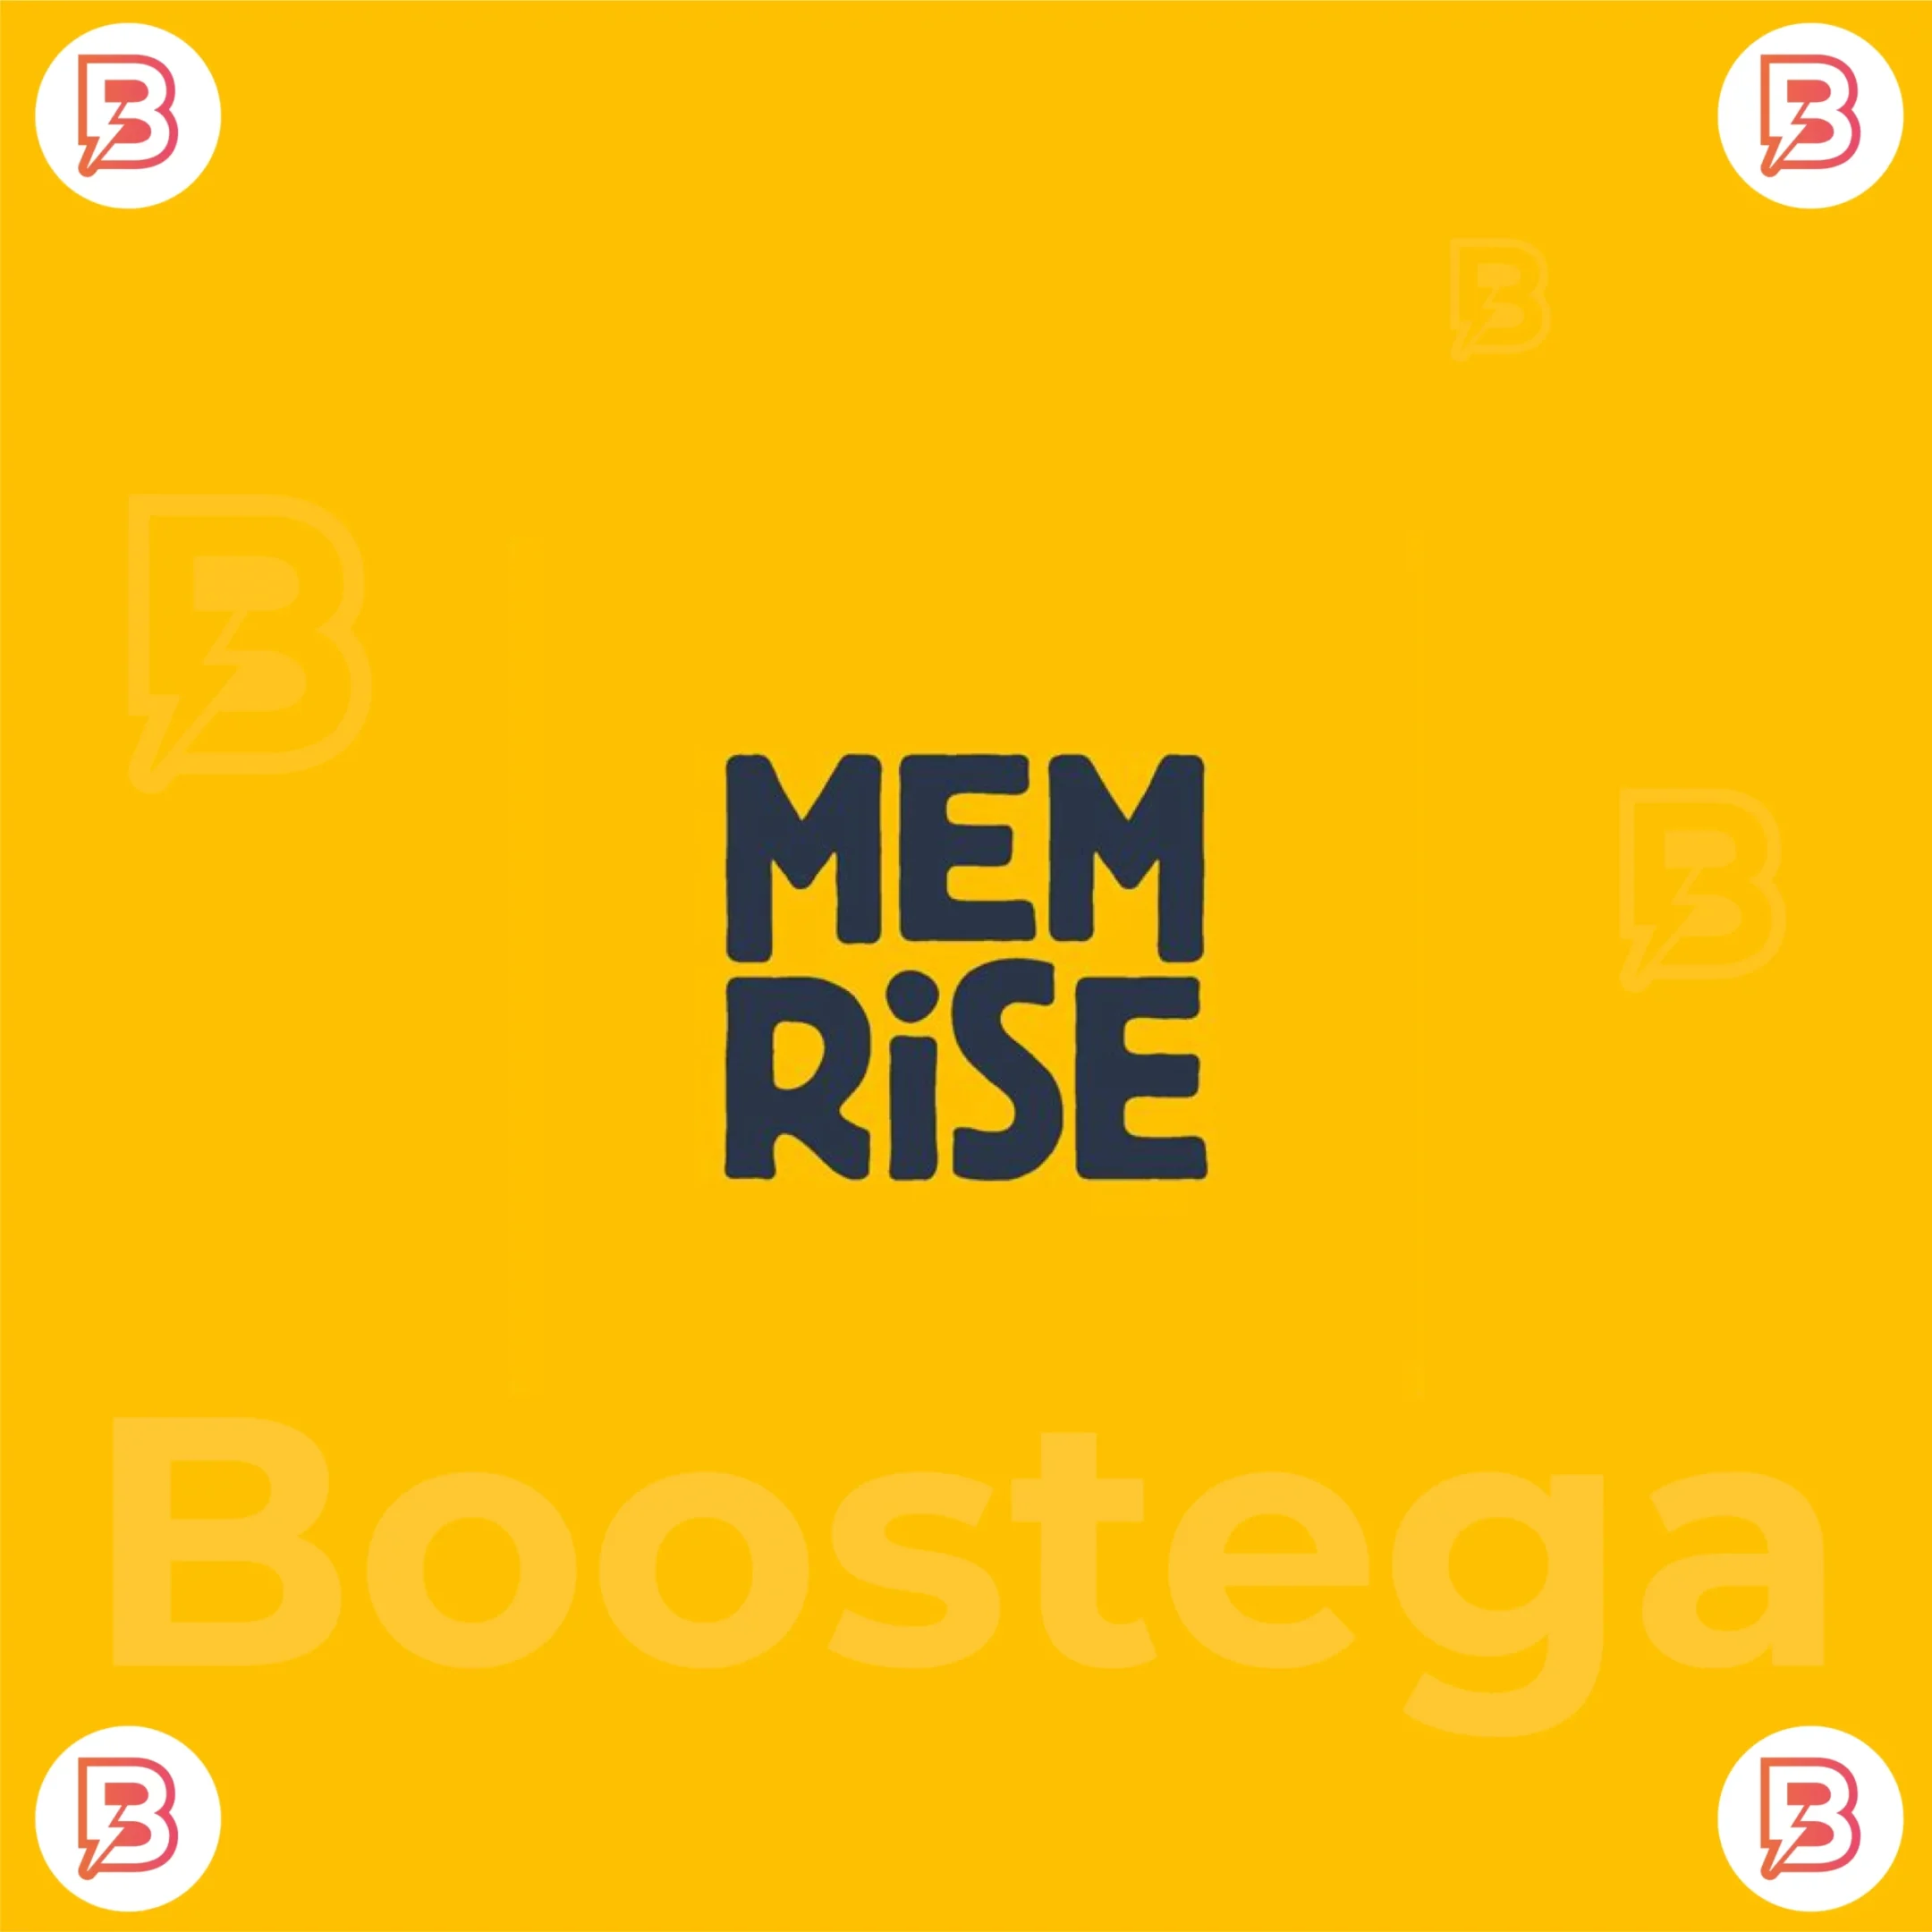 Buy Memrise Premium Account | Buy Memrise Pro Now | Boostega